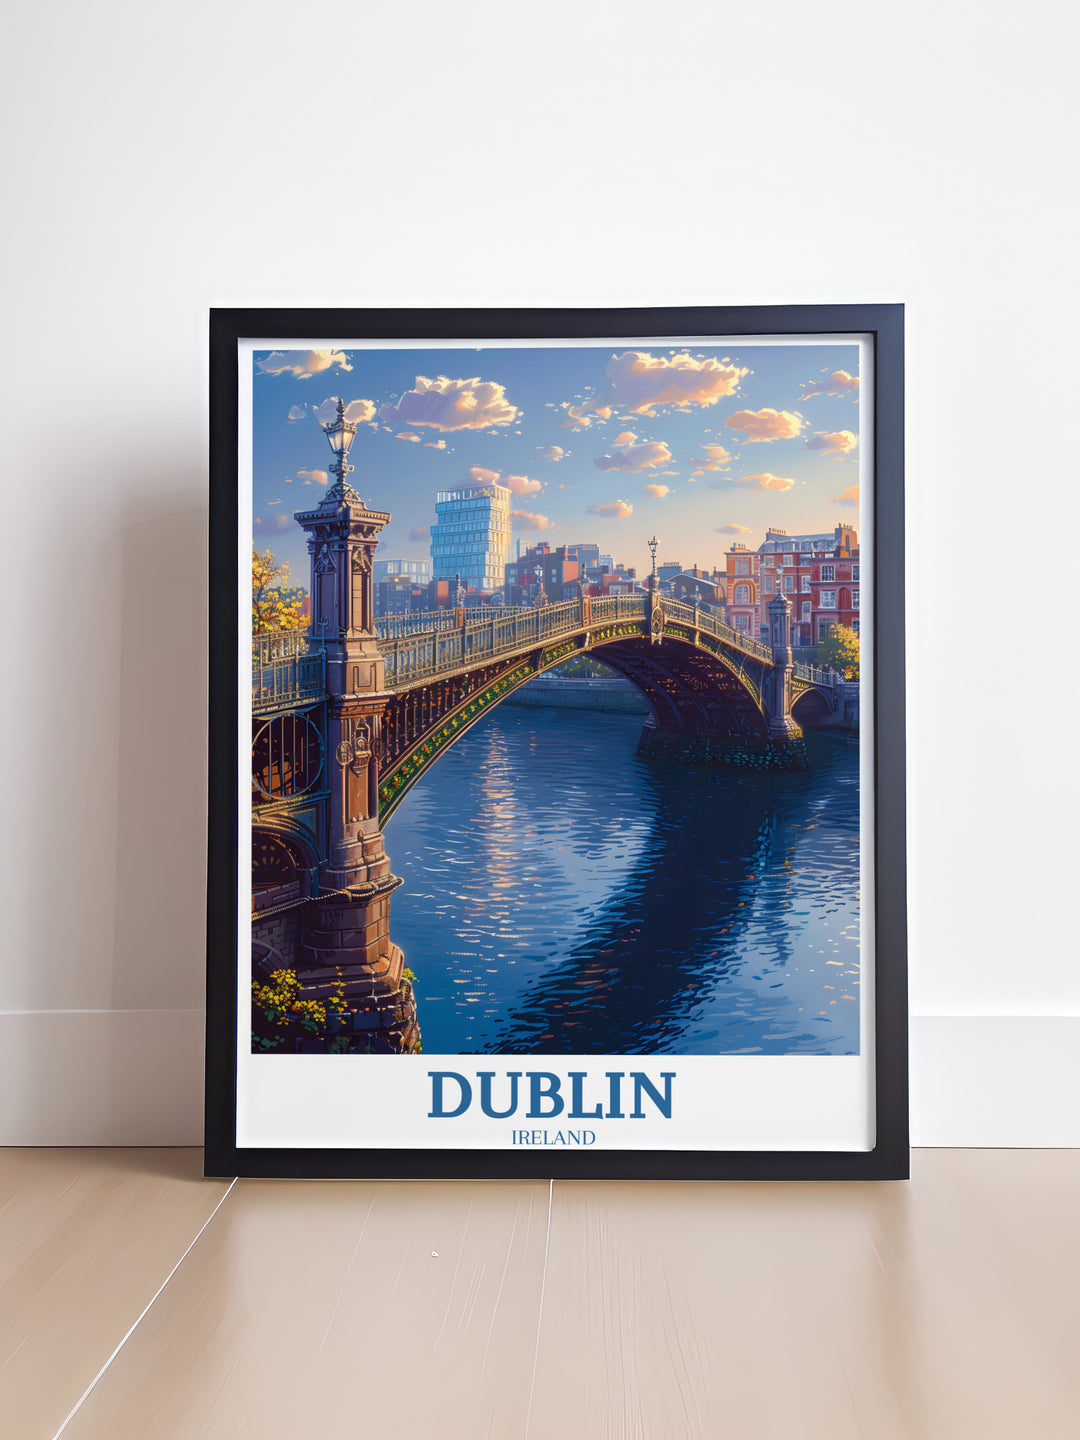 Dublin Ha'penny Bridge Poster: Capture Ireland's Charm in Your Home Décor